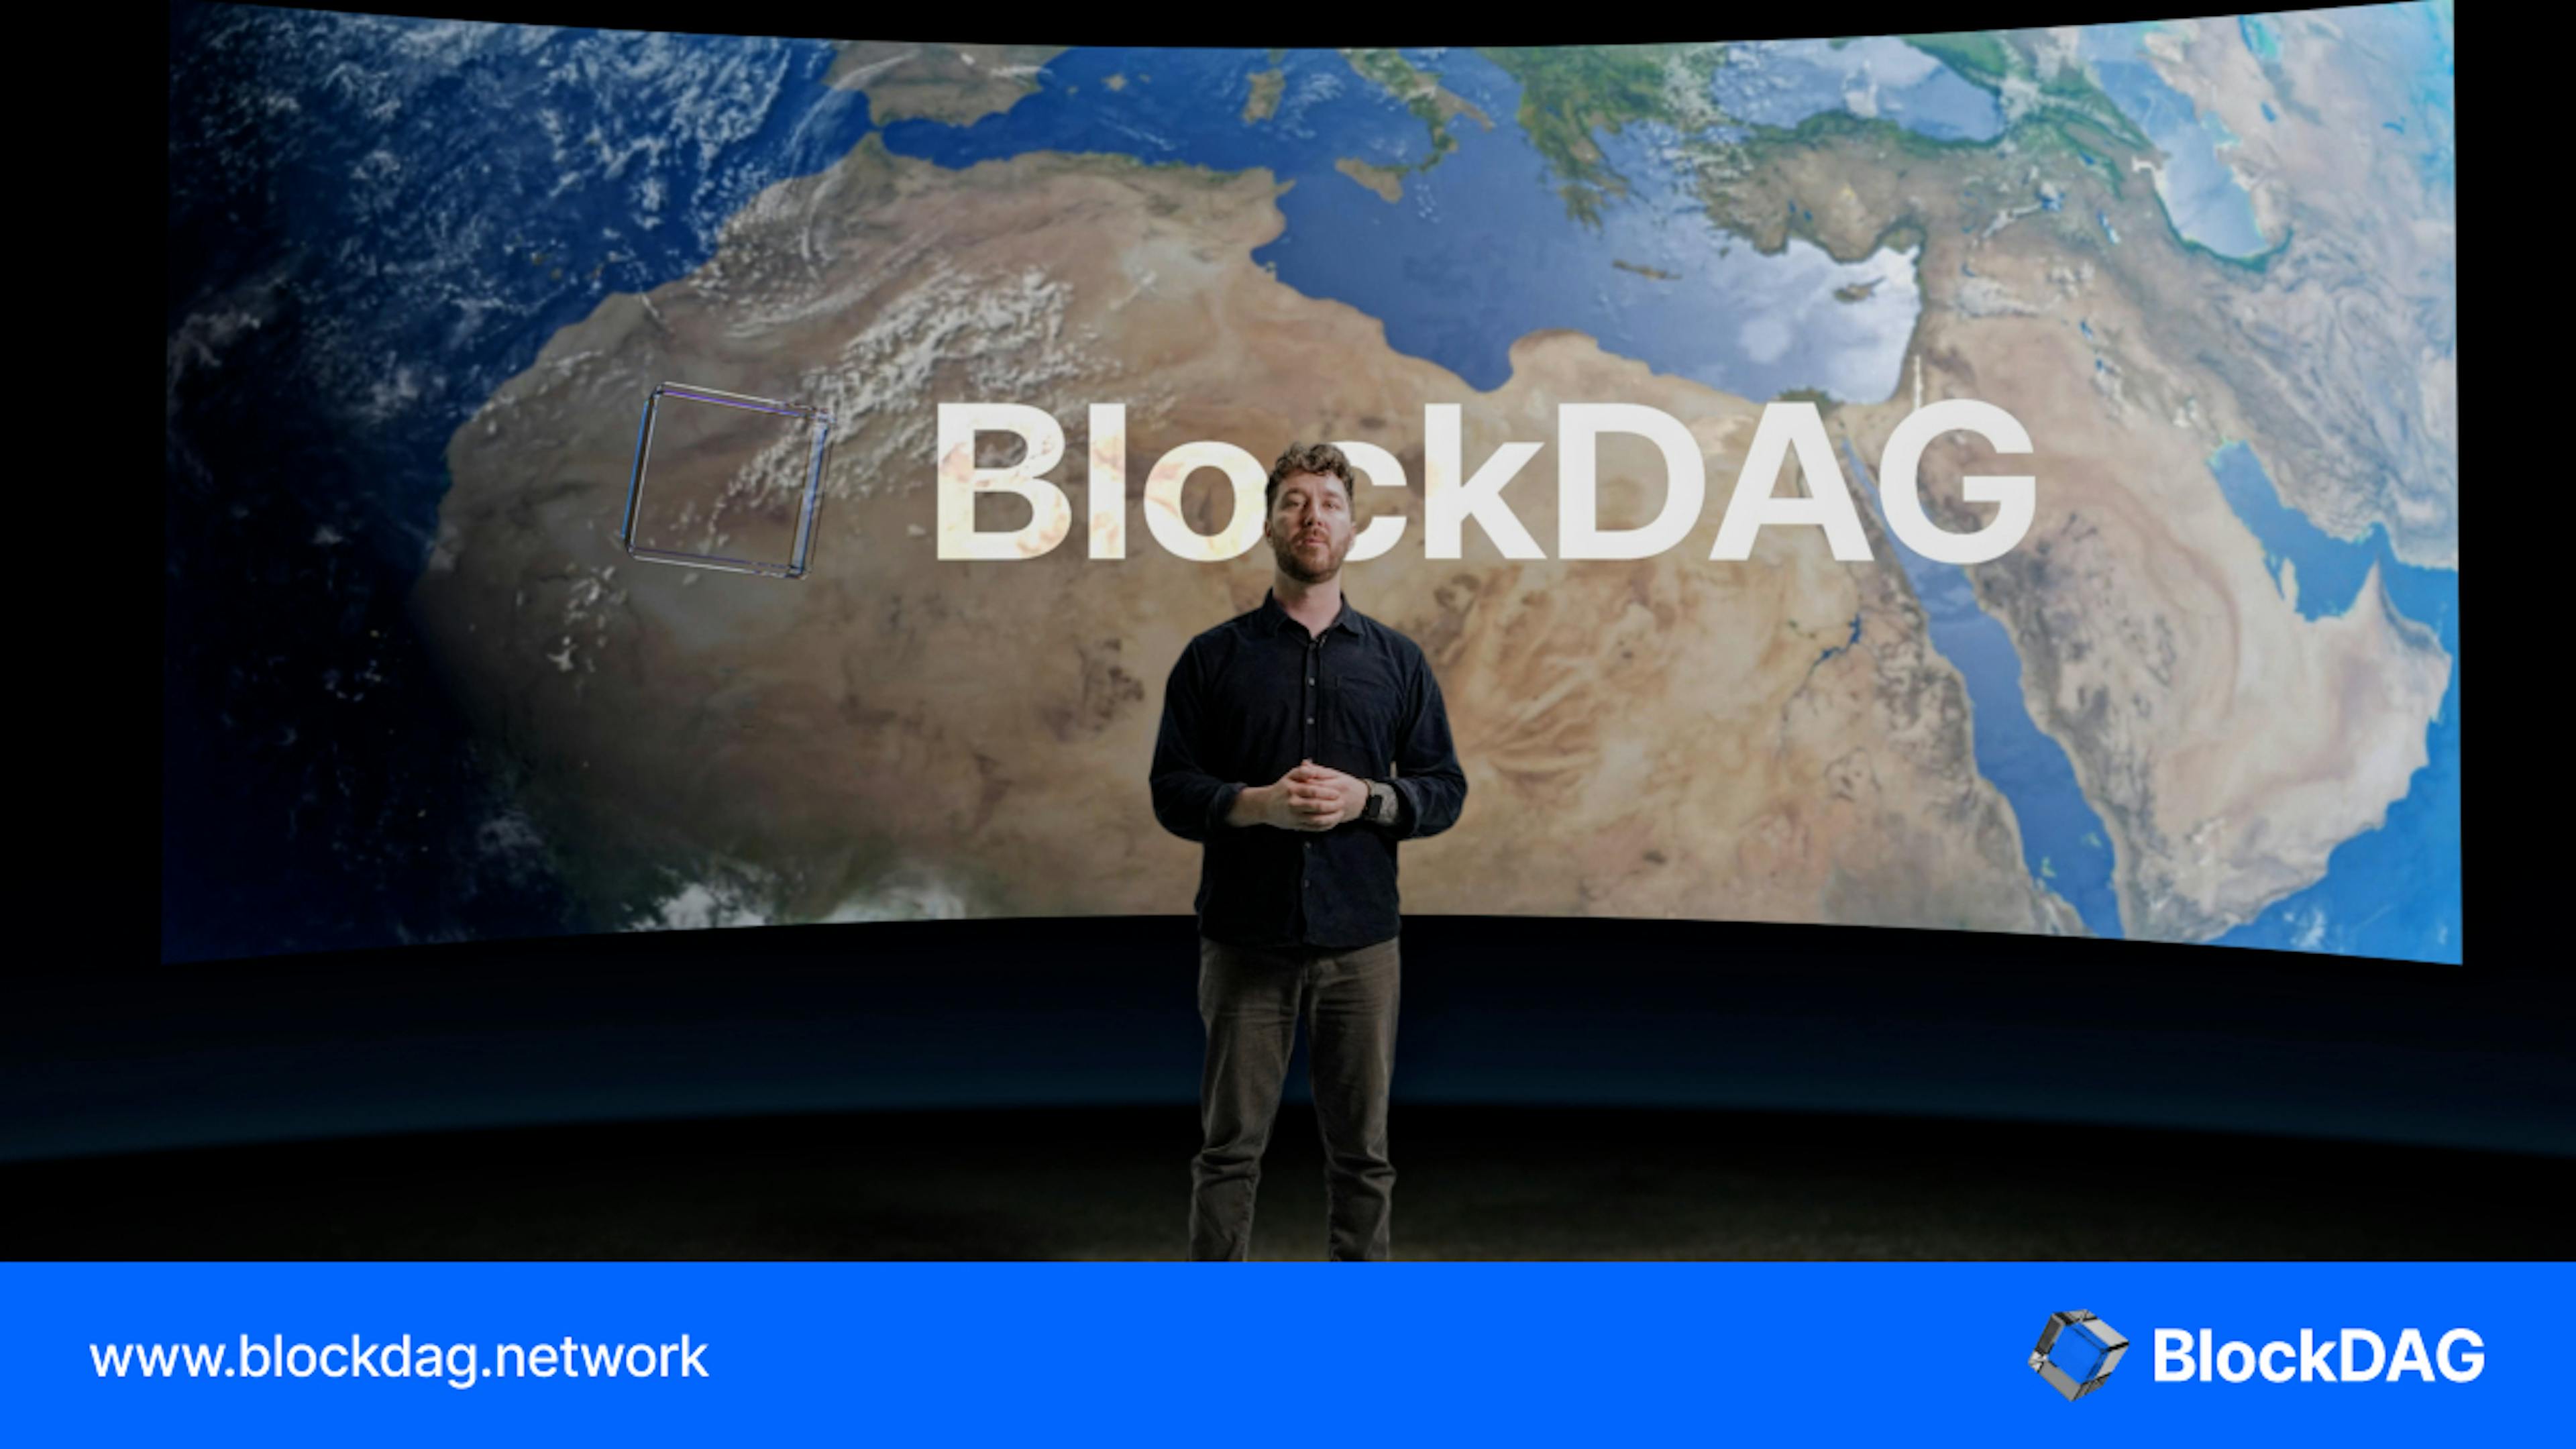 /ko/blockdag-네트워크,-암호화폐-프로젝트-참여-방식을-바꾸는-글로벌-기조-연설-영상-공개 feature image